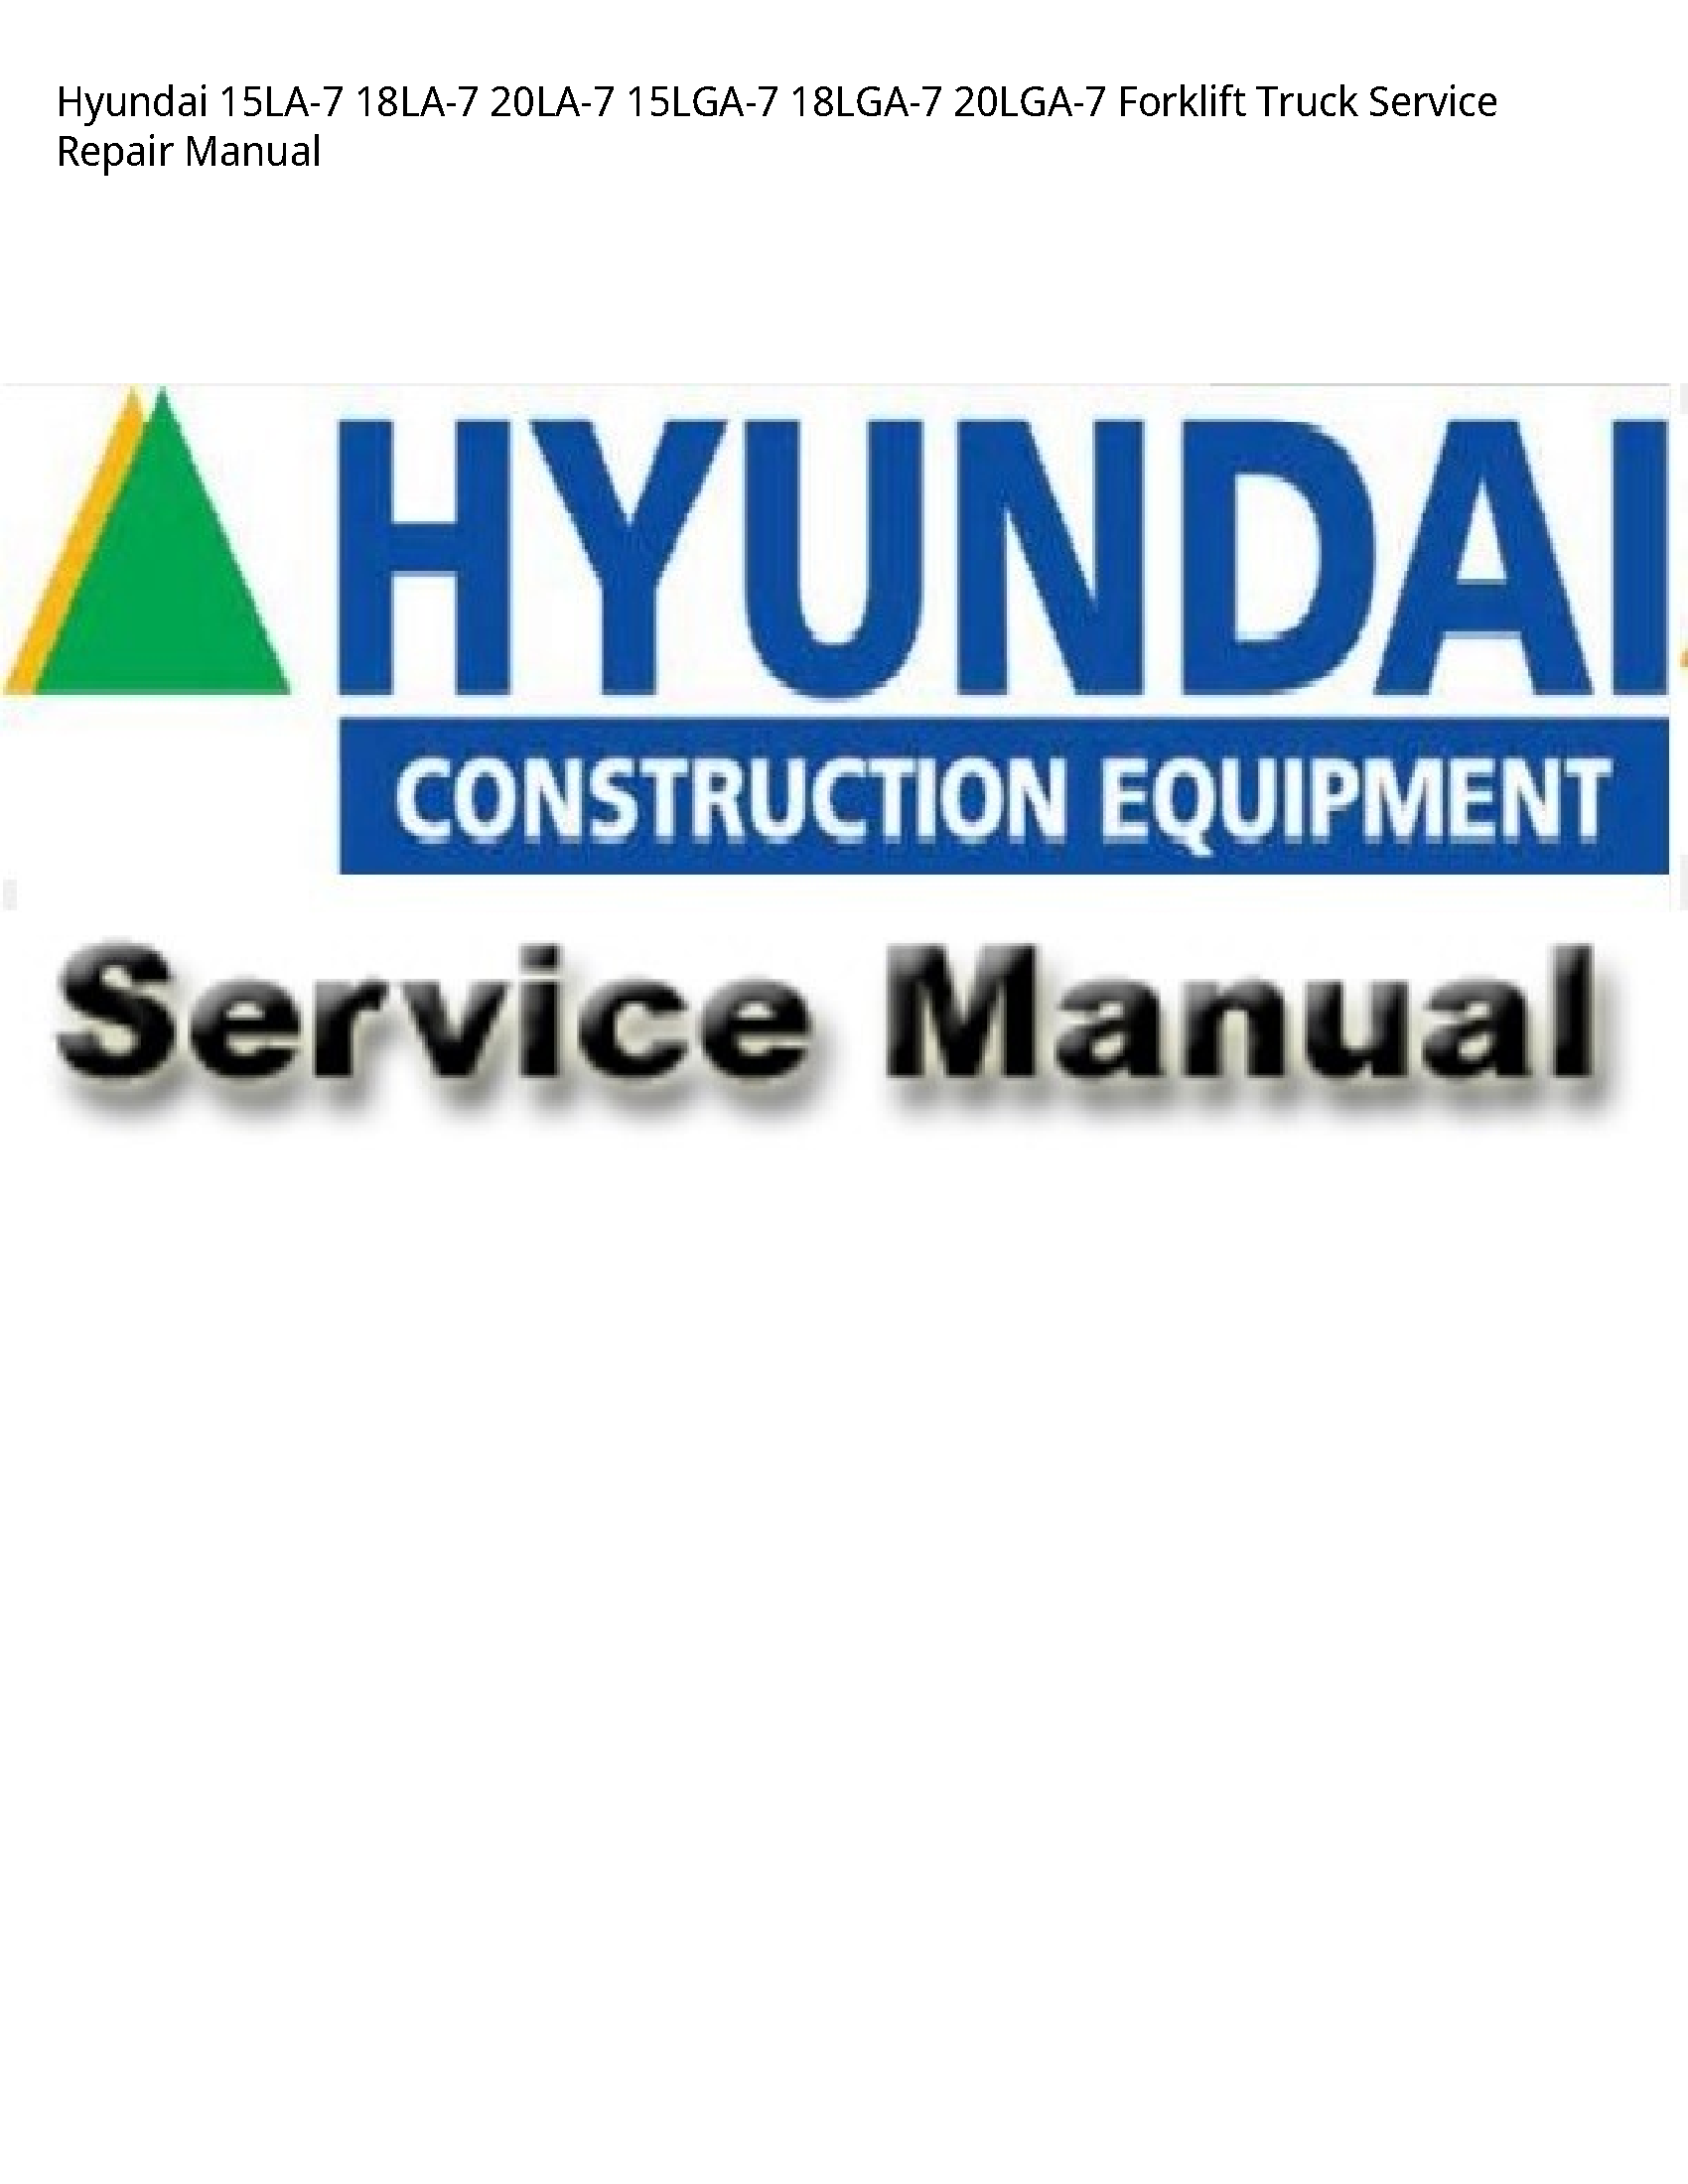 Hyundai 15LA-7 Forklift Truck manual